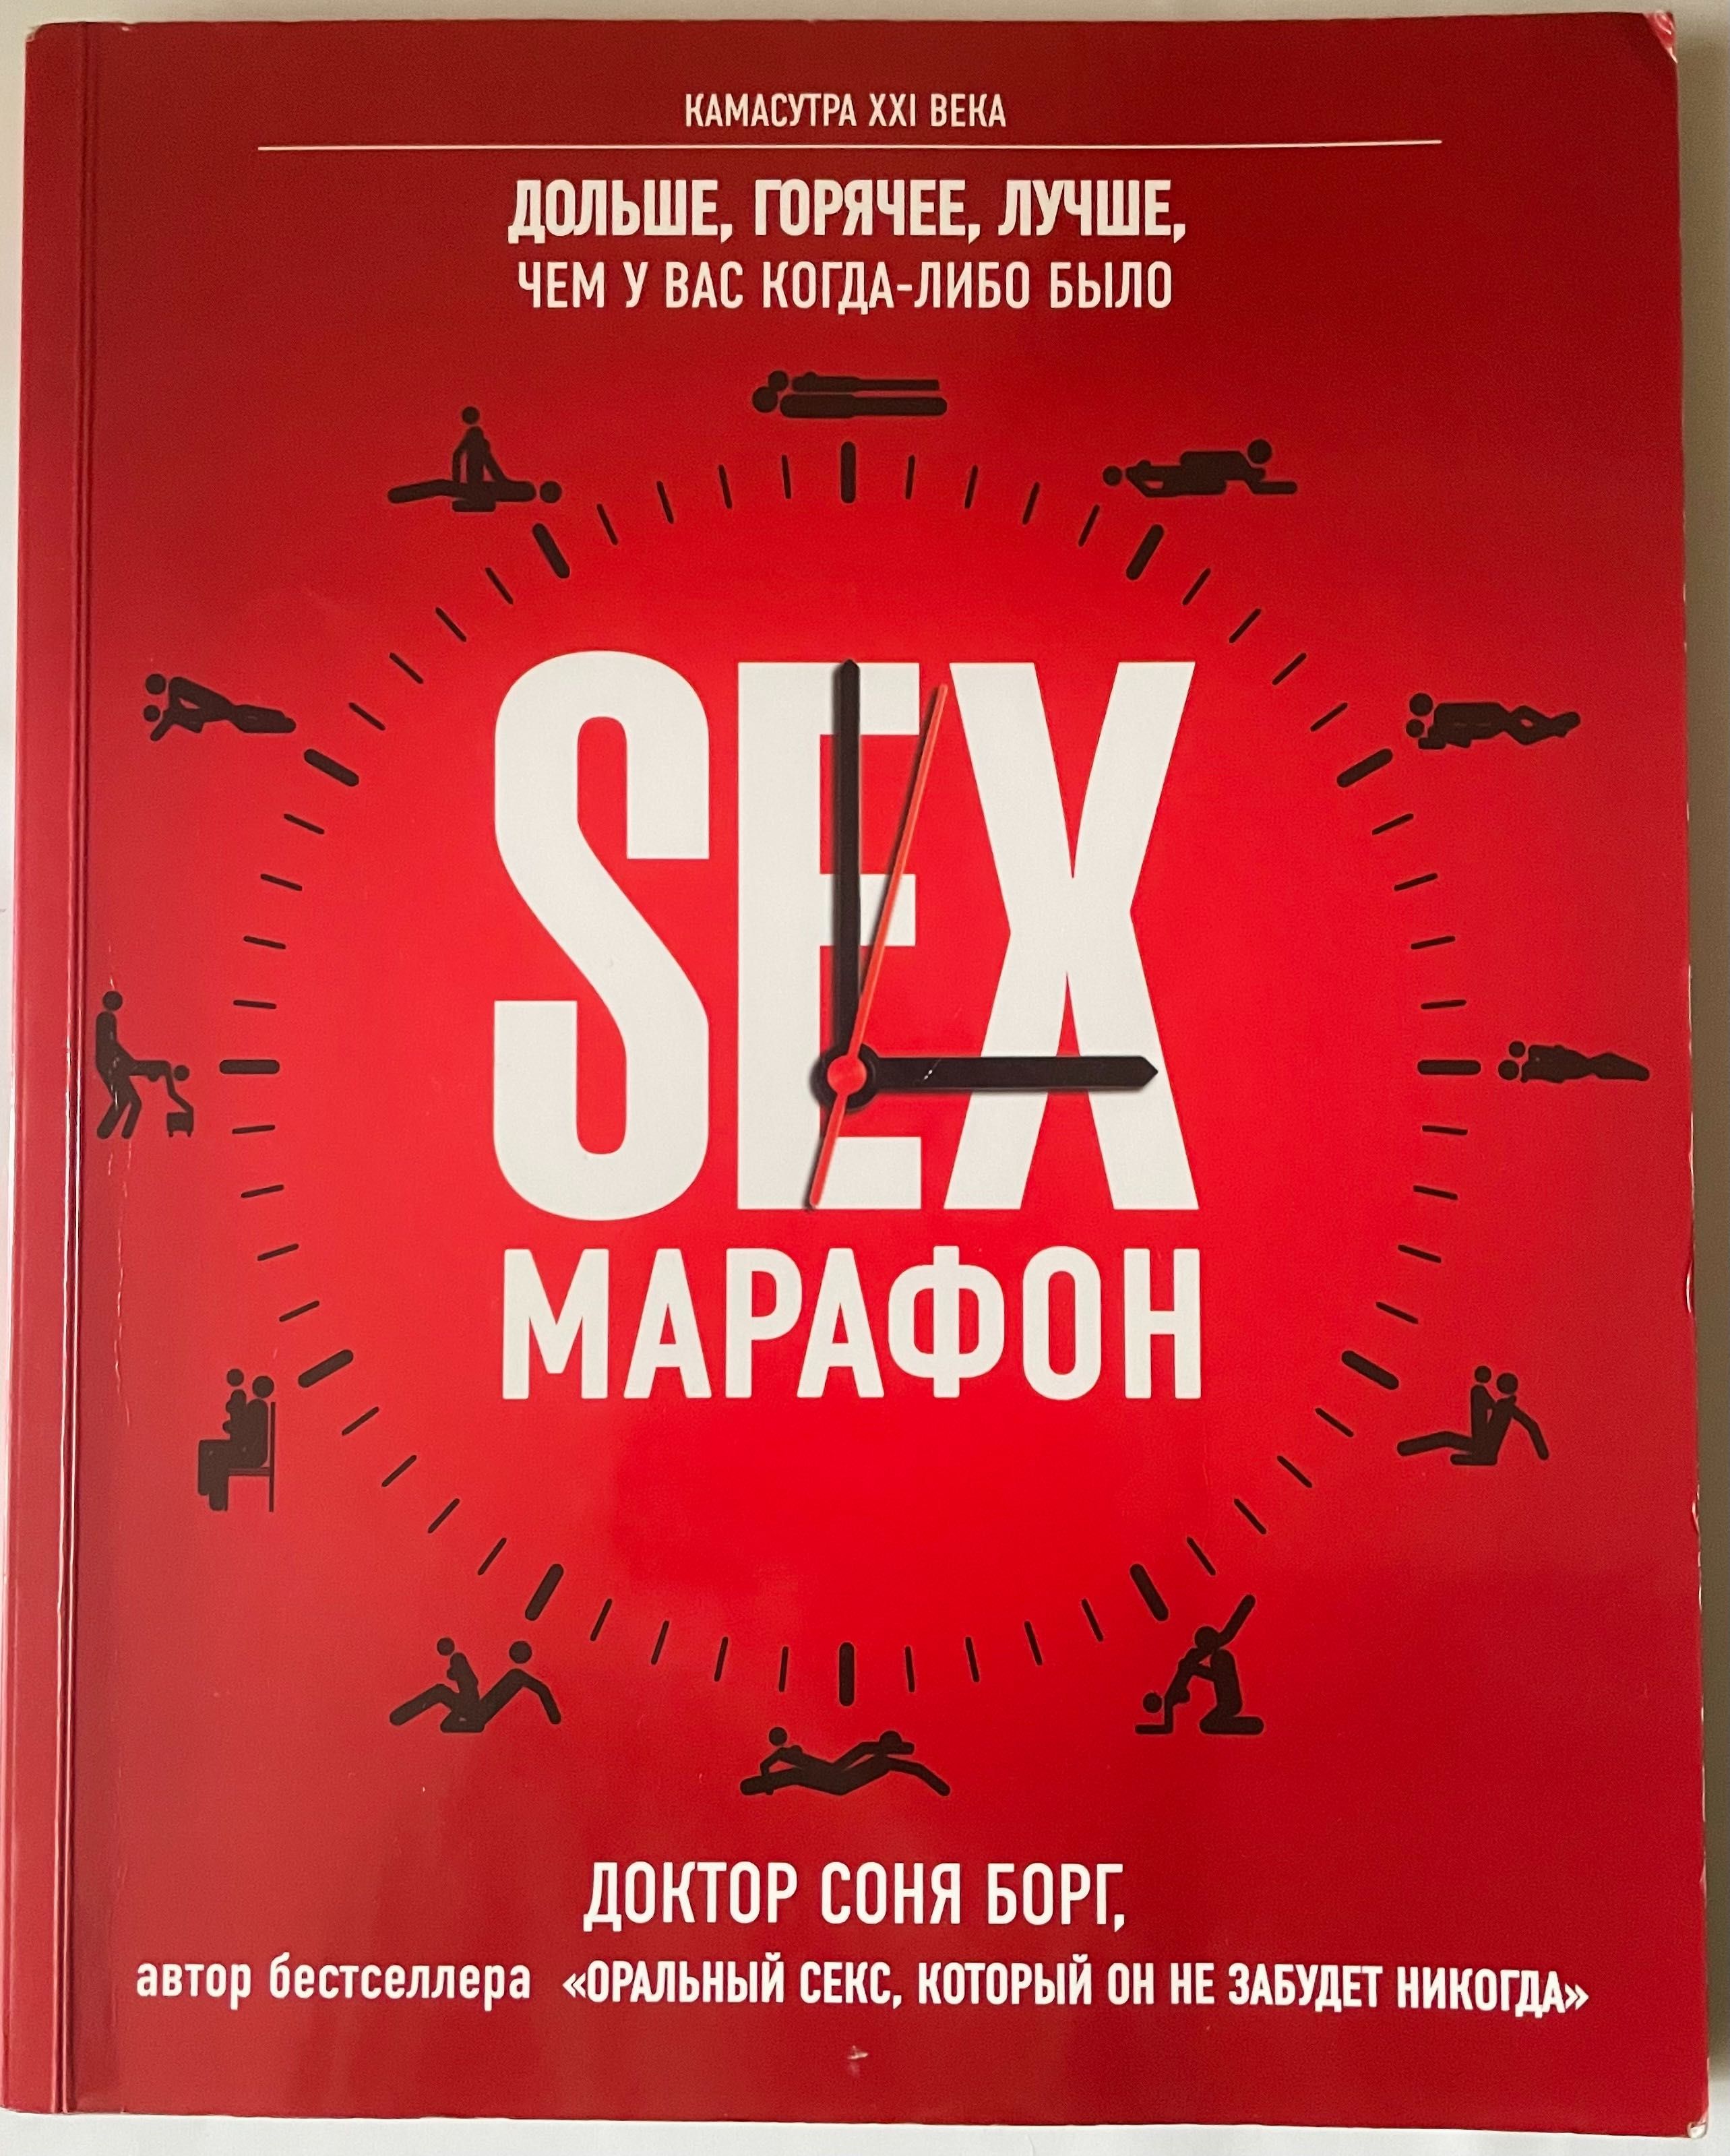 Sex энциклопедия радости секса камасутра эротика секс интим